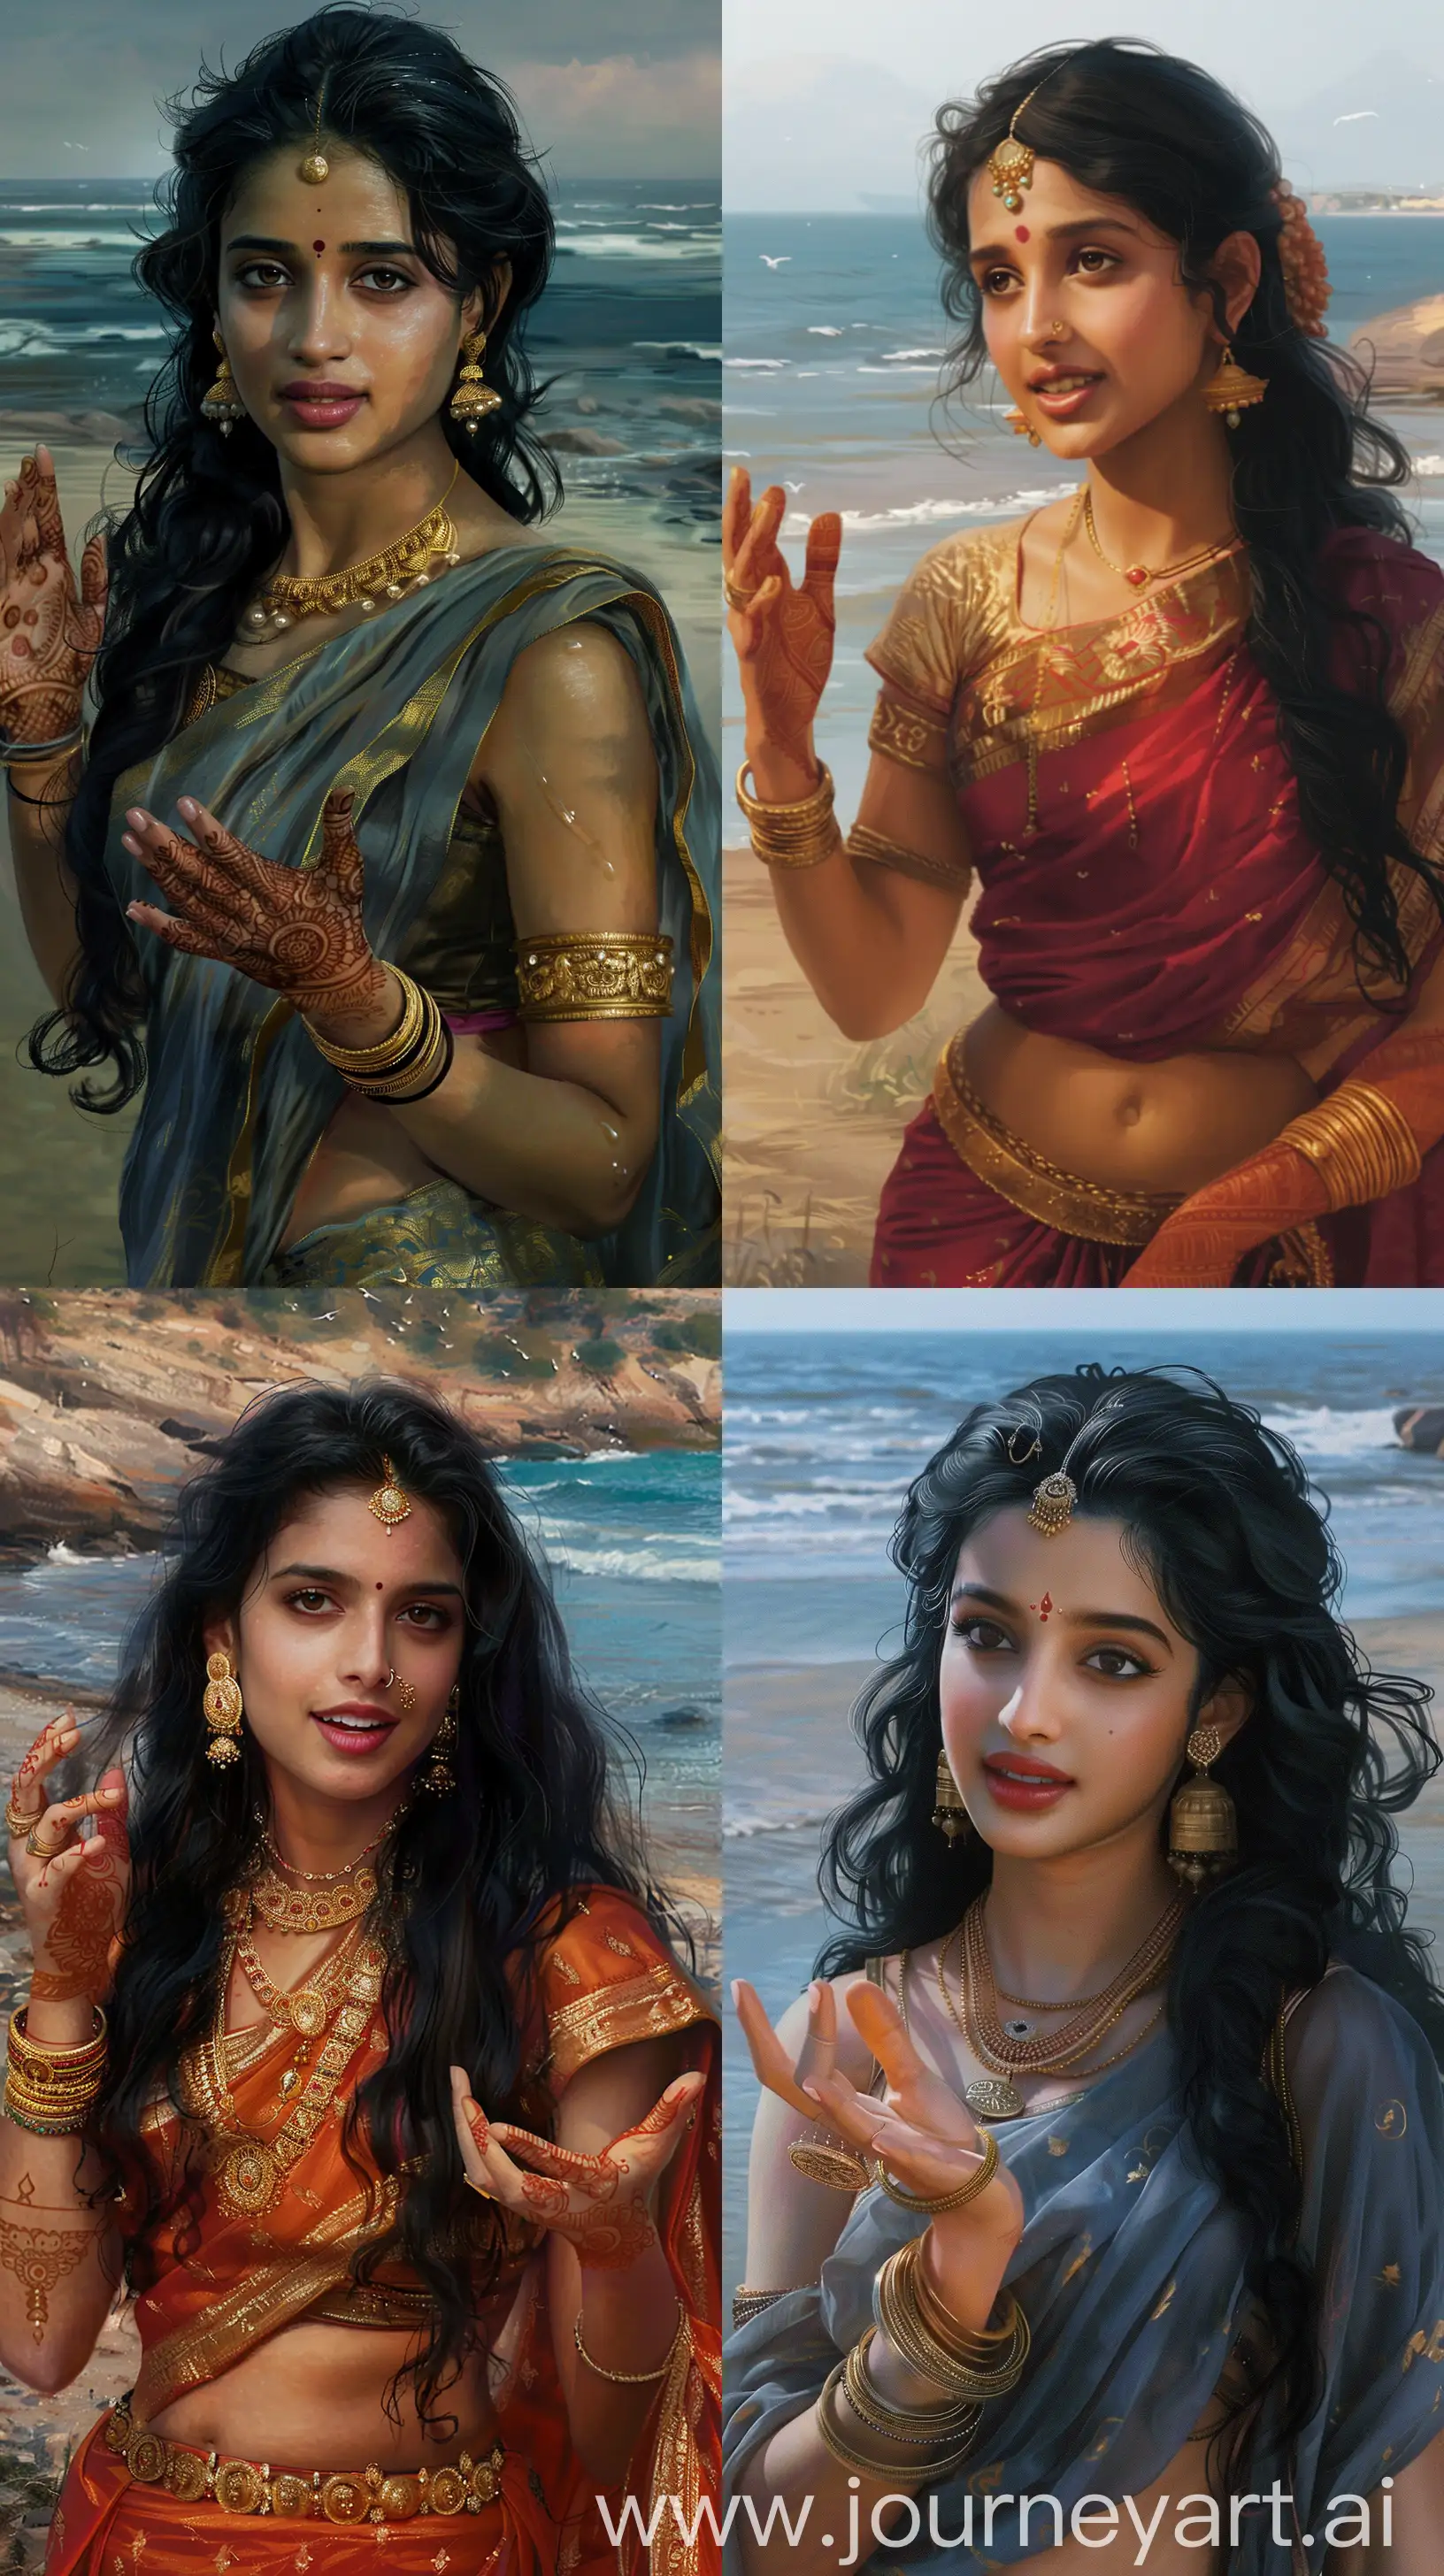 Graceful-Indian-Woman-Conversing-by-the-Seashore-in-Raj-Ravi-Varma-Art-Style